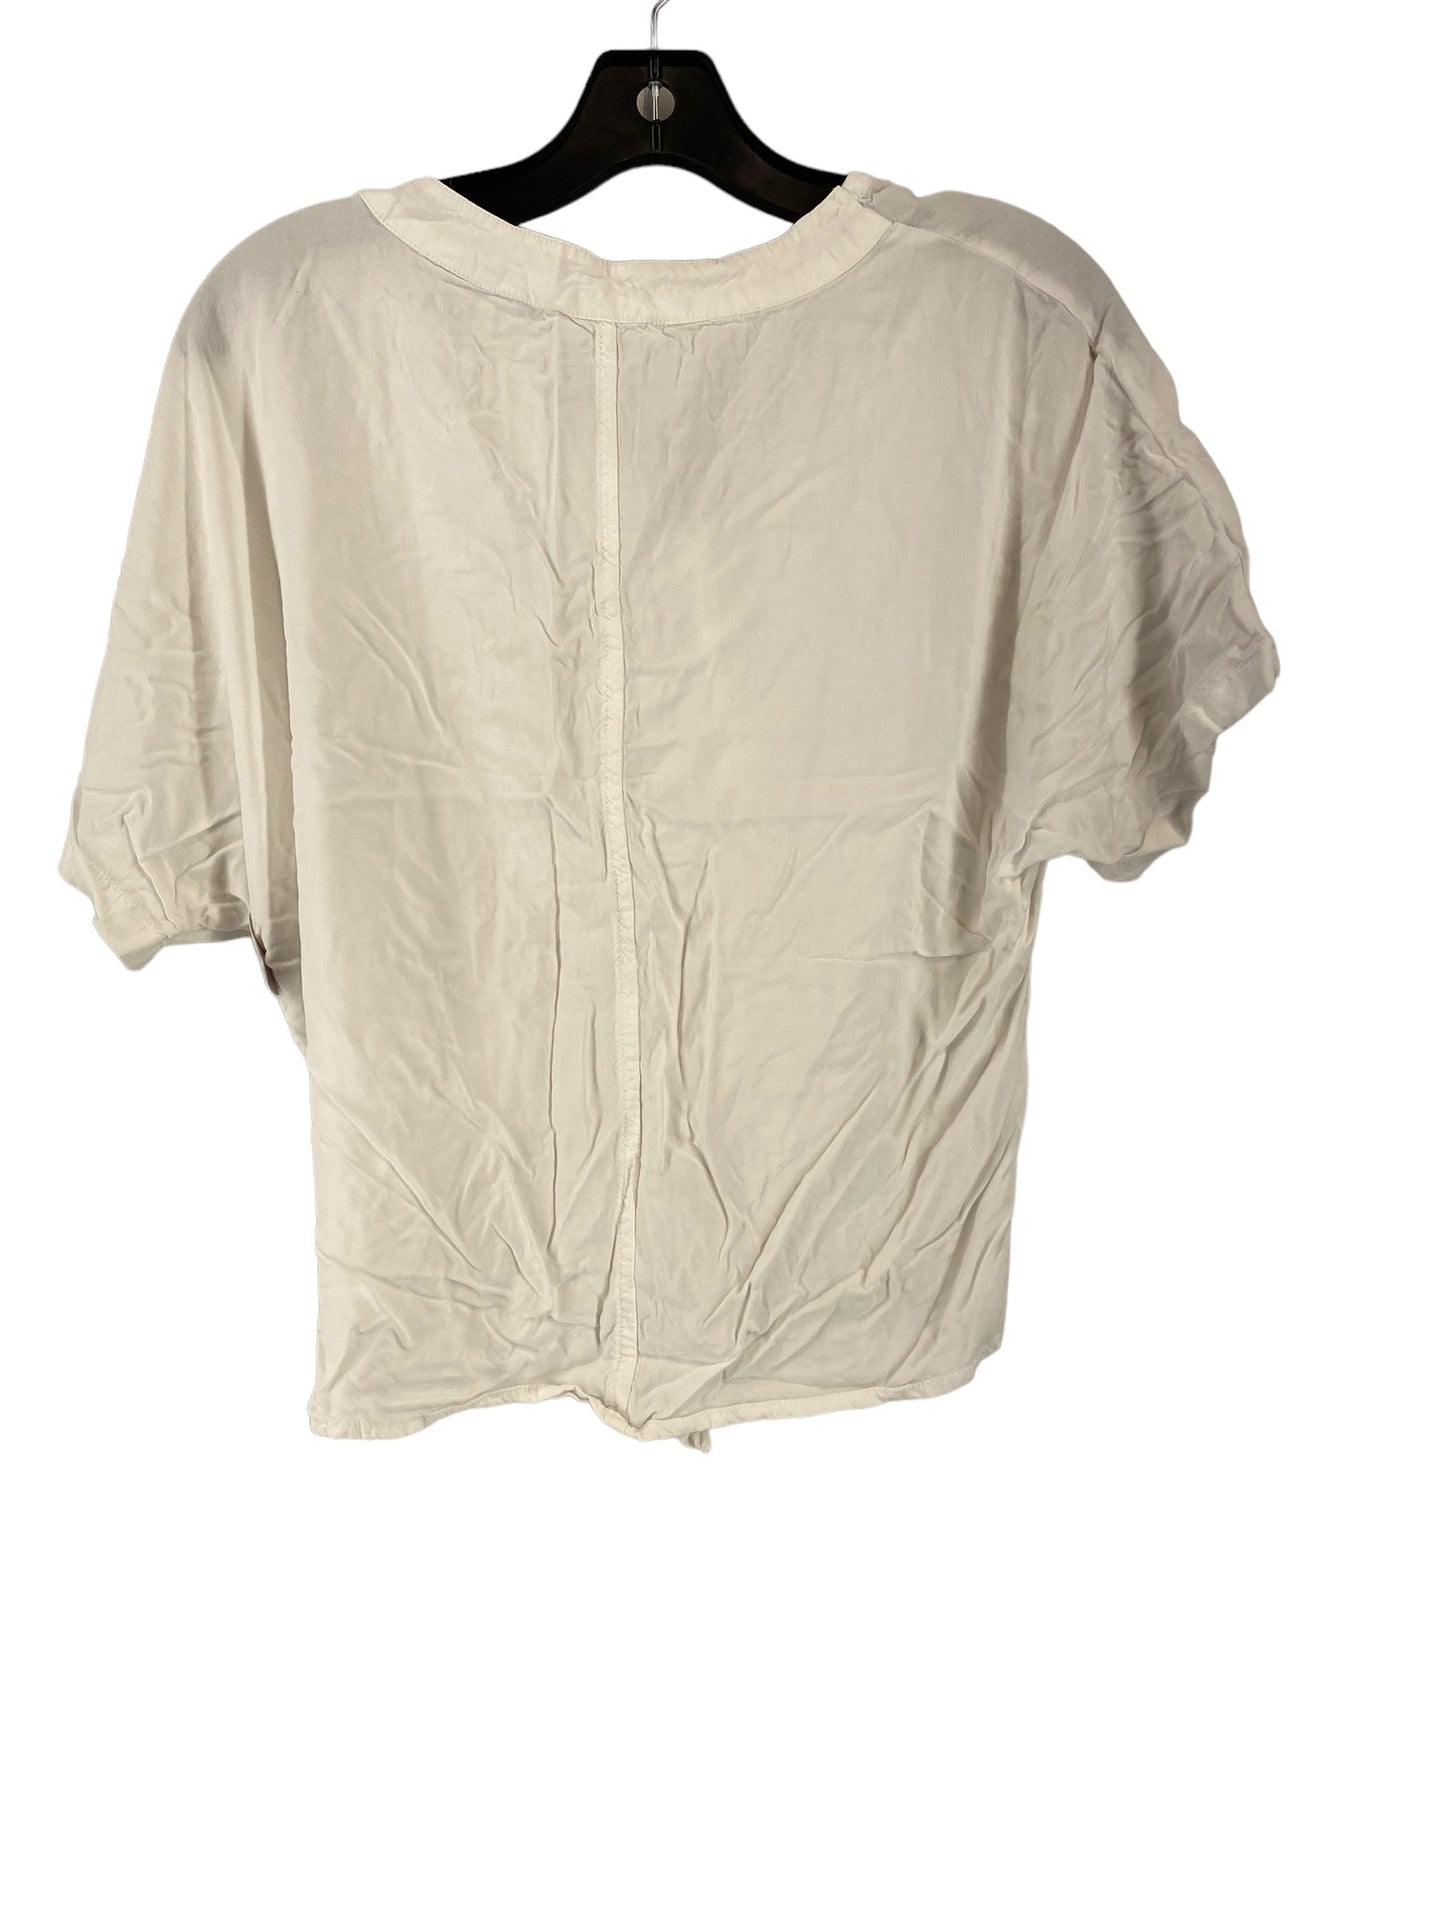 Blouse Short Sleeve By Beachlunchlounge  Size: Xs